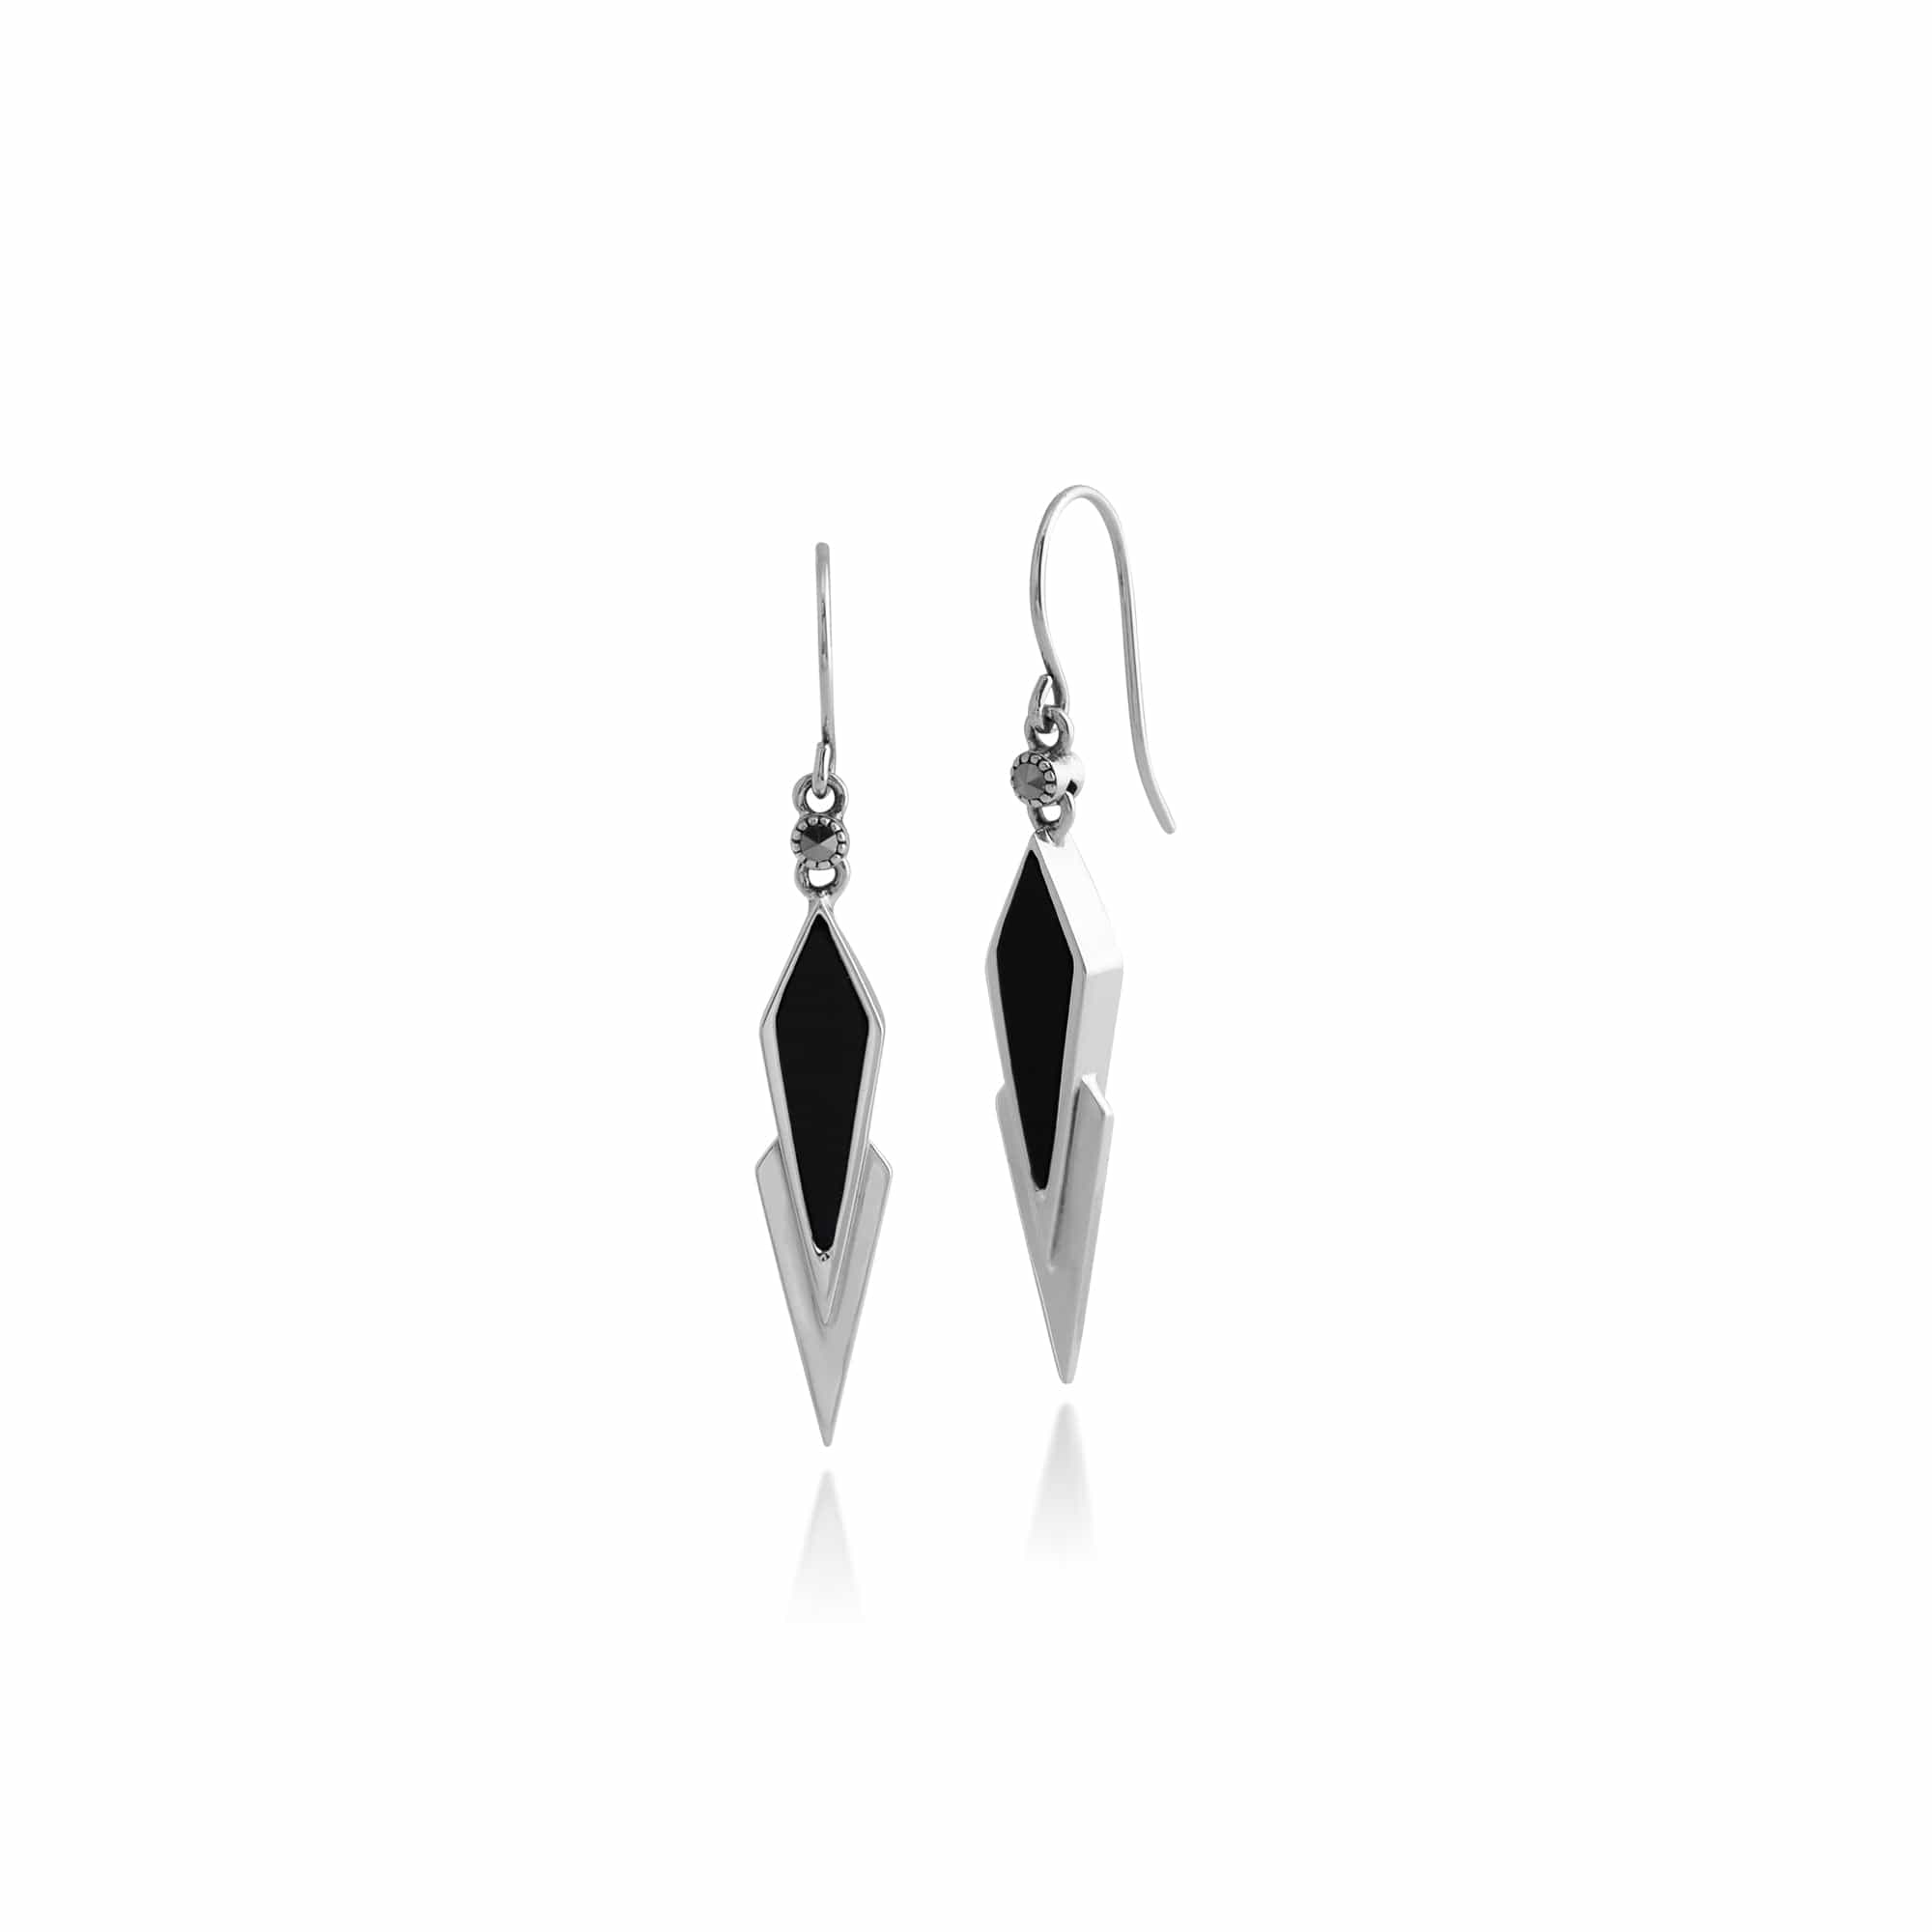 Art Deco Style Black Onyx & Marcasite Triangular Drop Earrings in 925 Sterling Silver - Gemondo